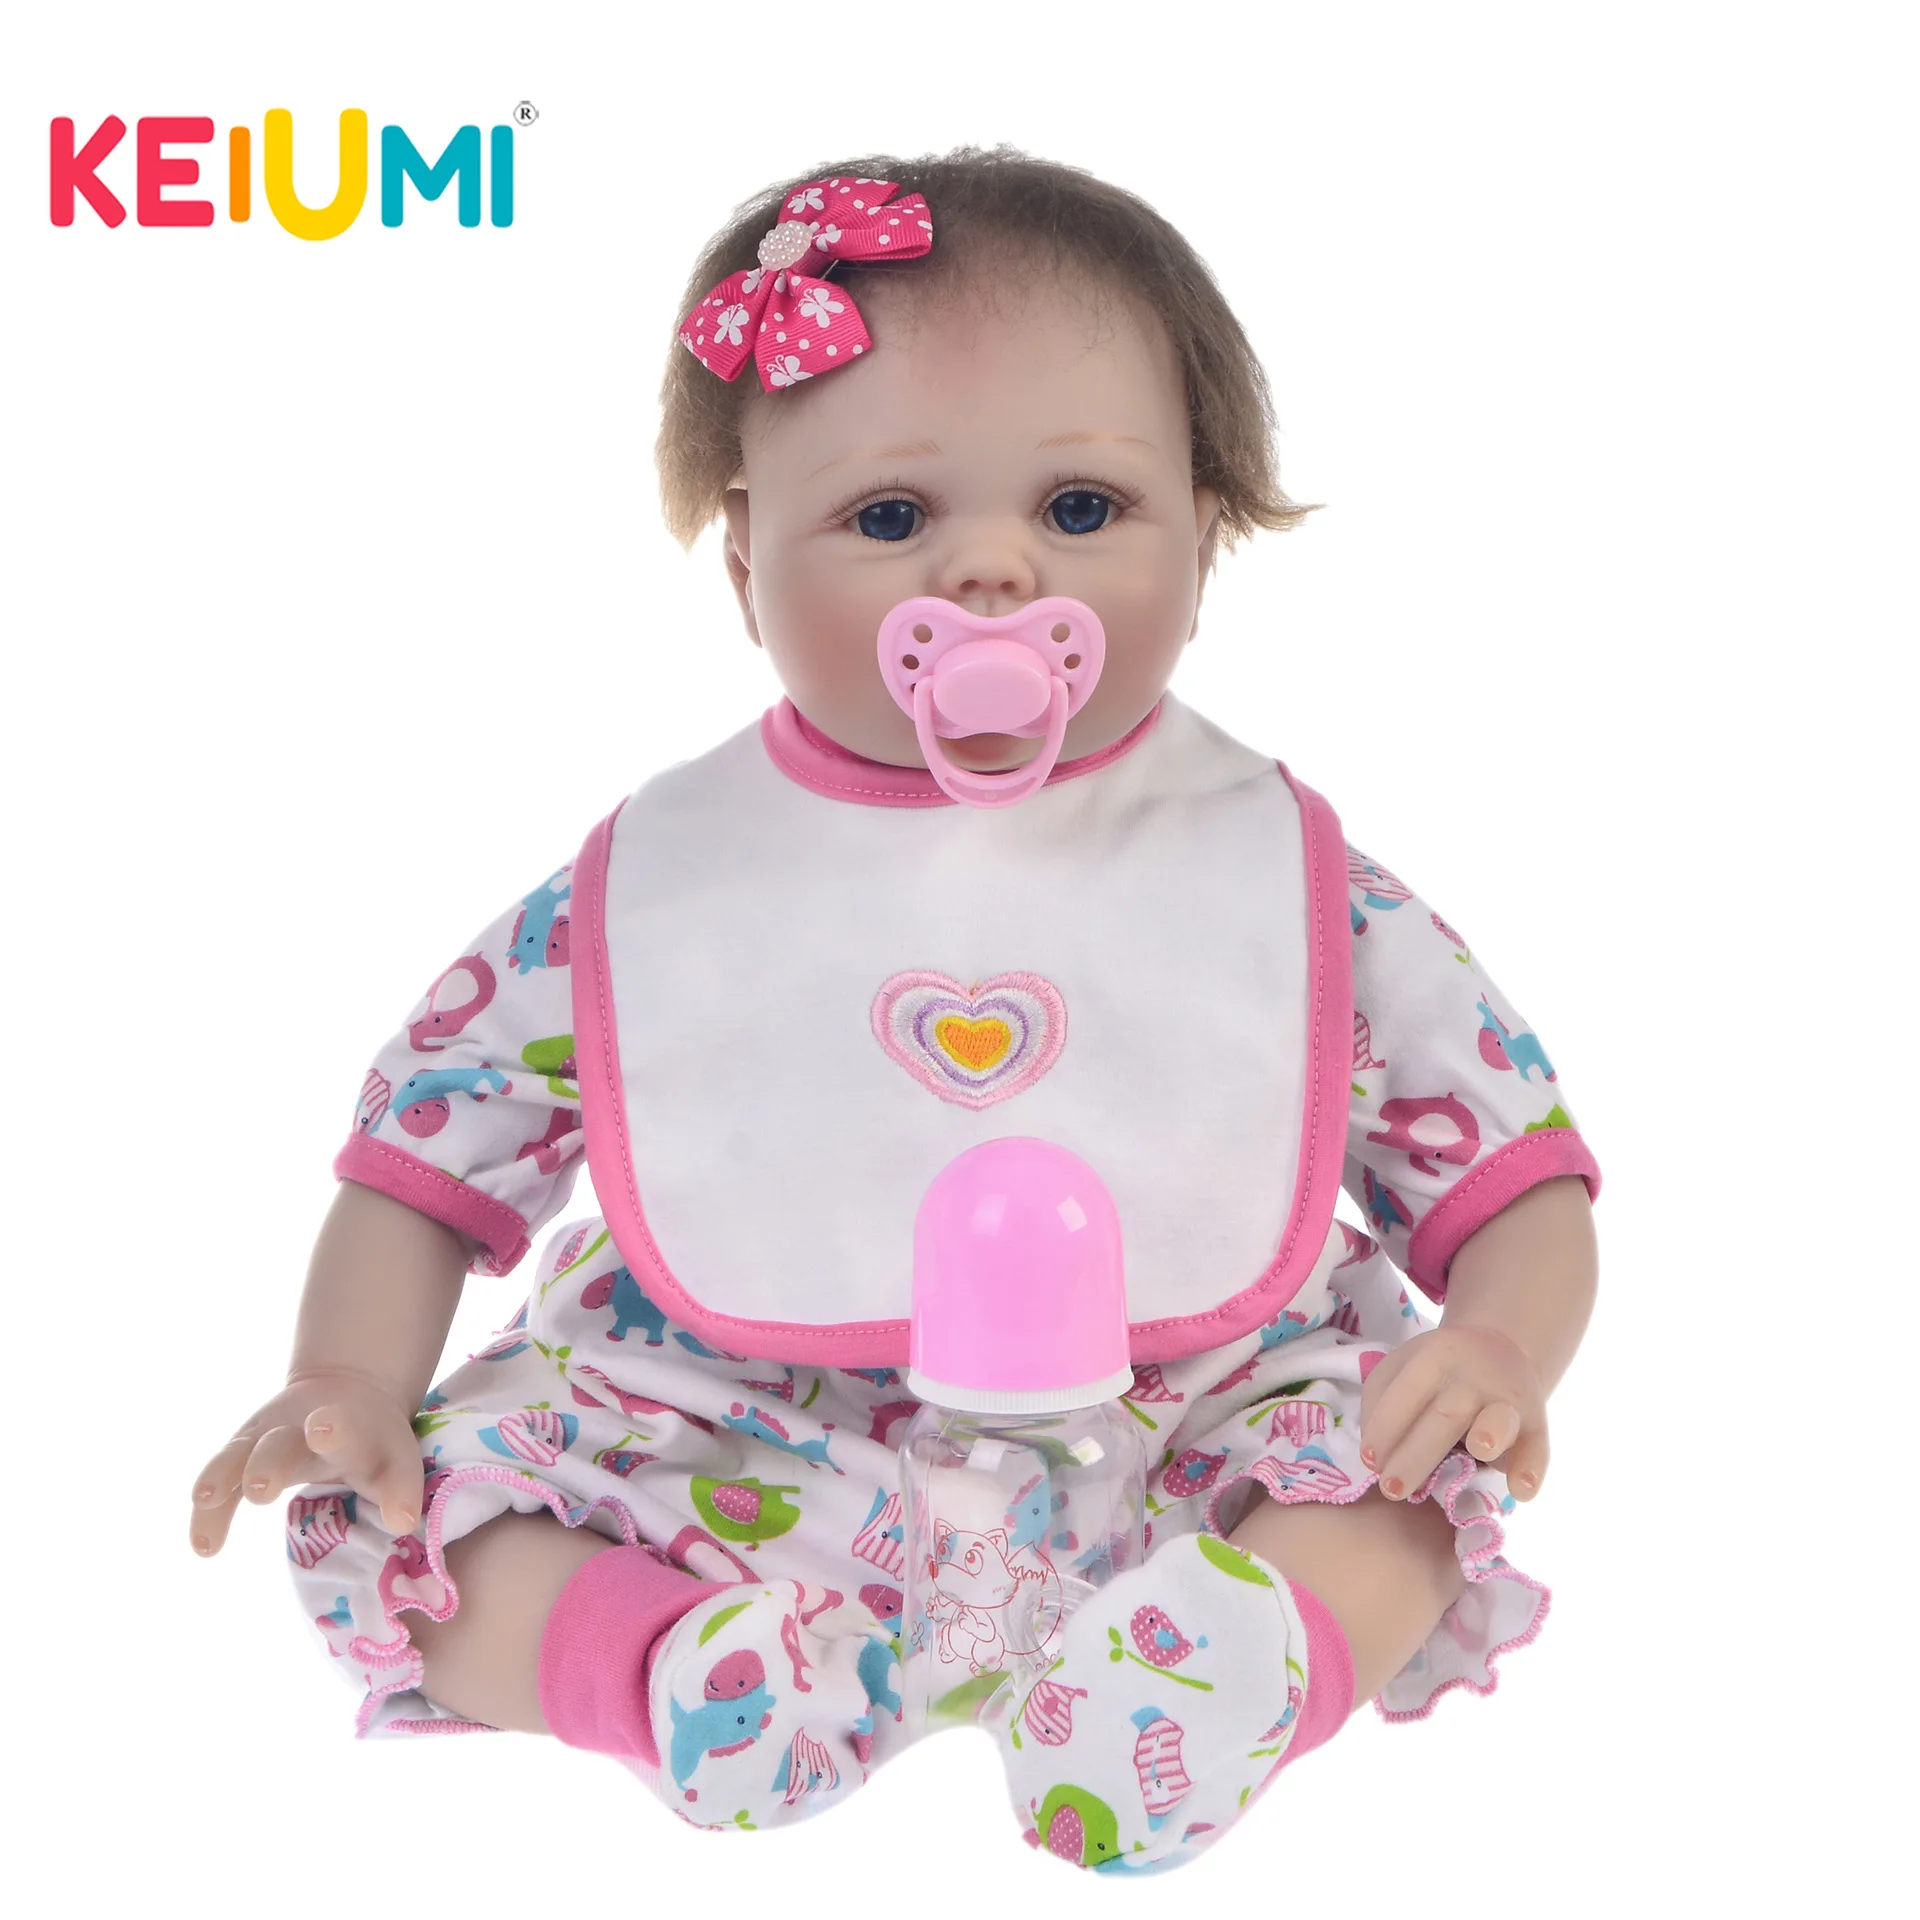  Keiumi Hot Selling 55cm Reborn Baby Doll Model Baby Reborn Baby